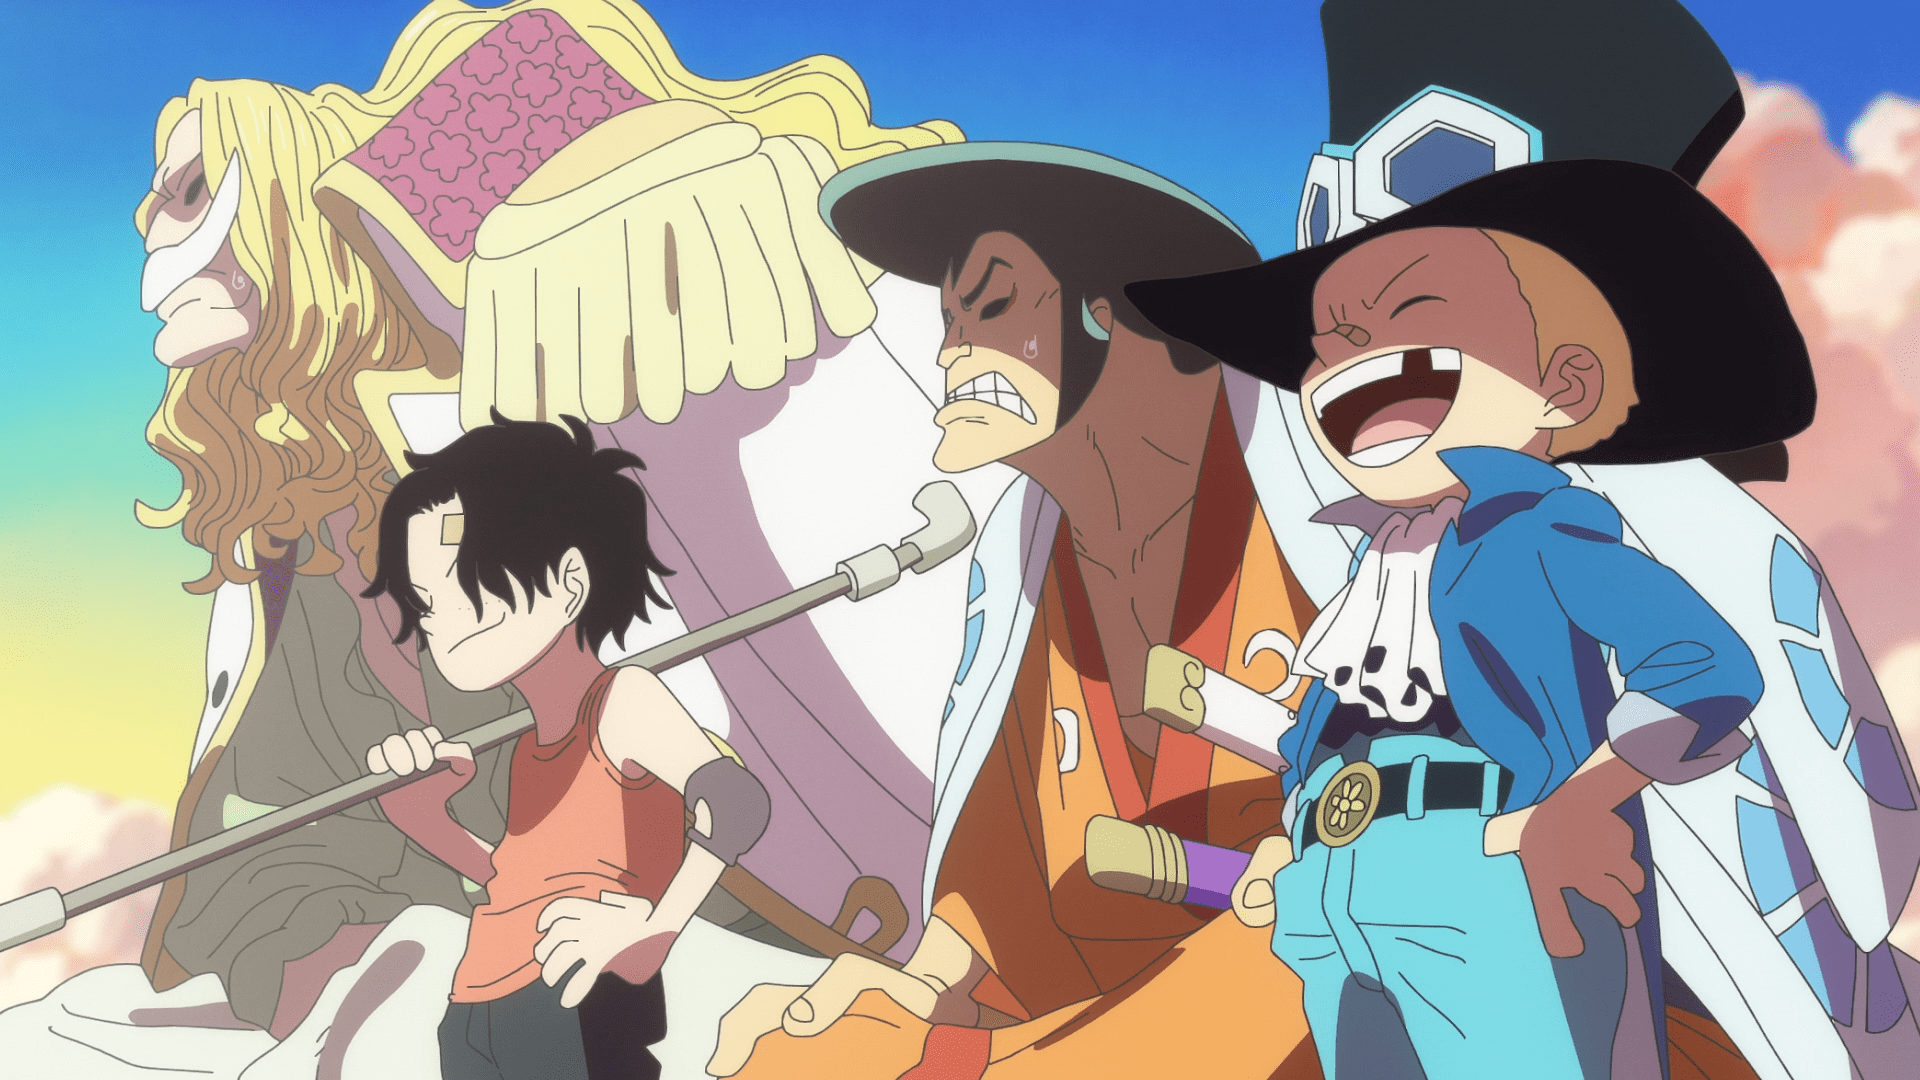 Geo on X: One Piece 1015 is still the single greatest anime